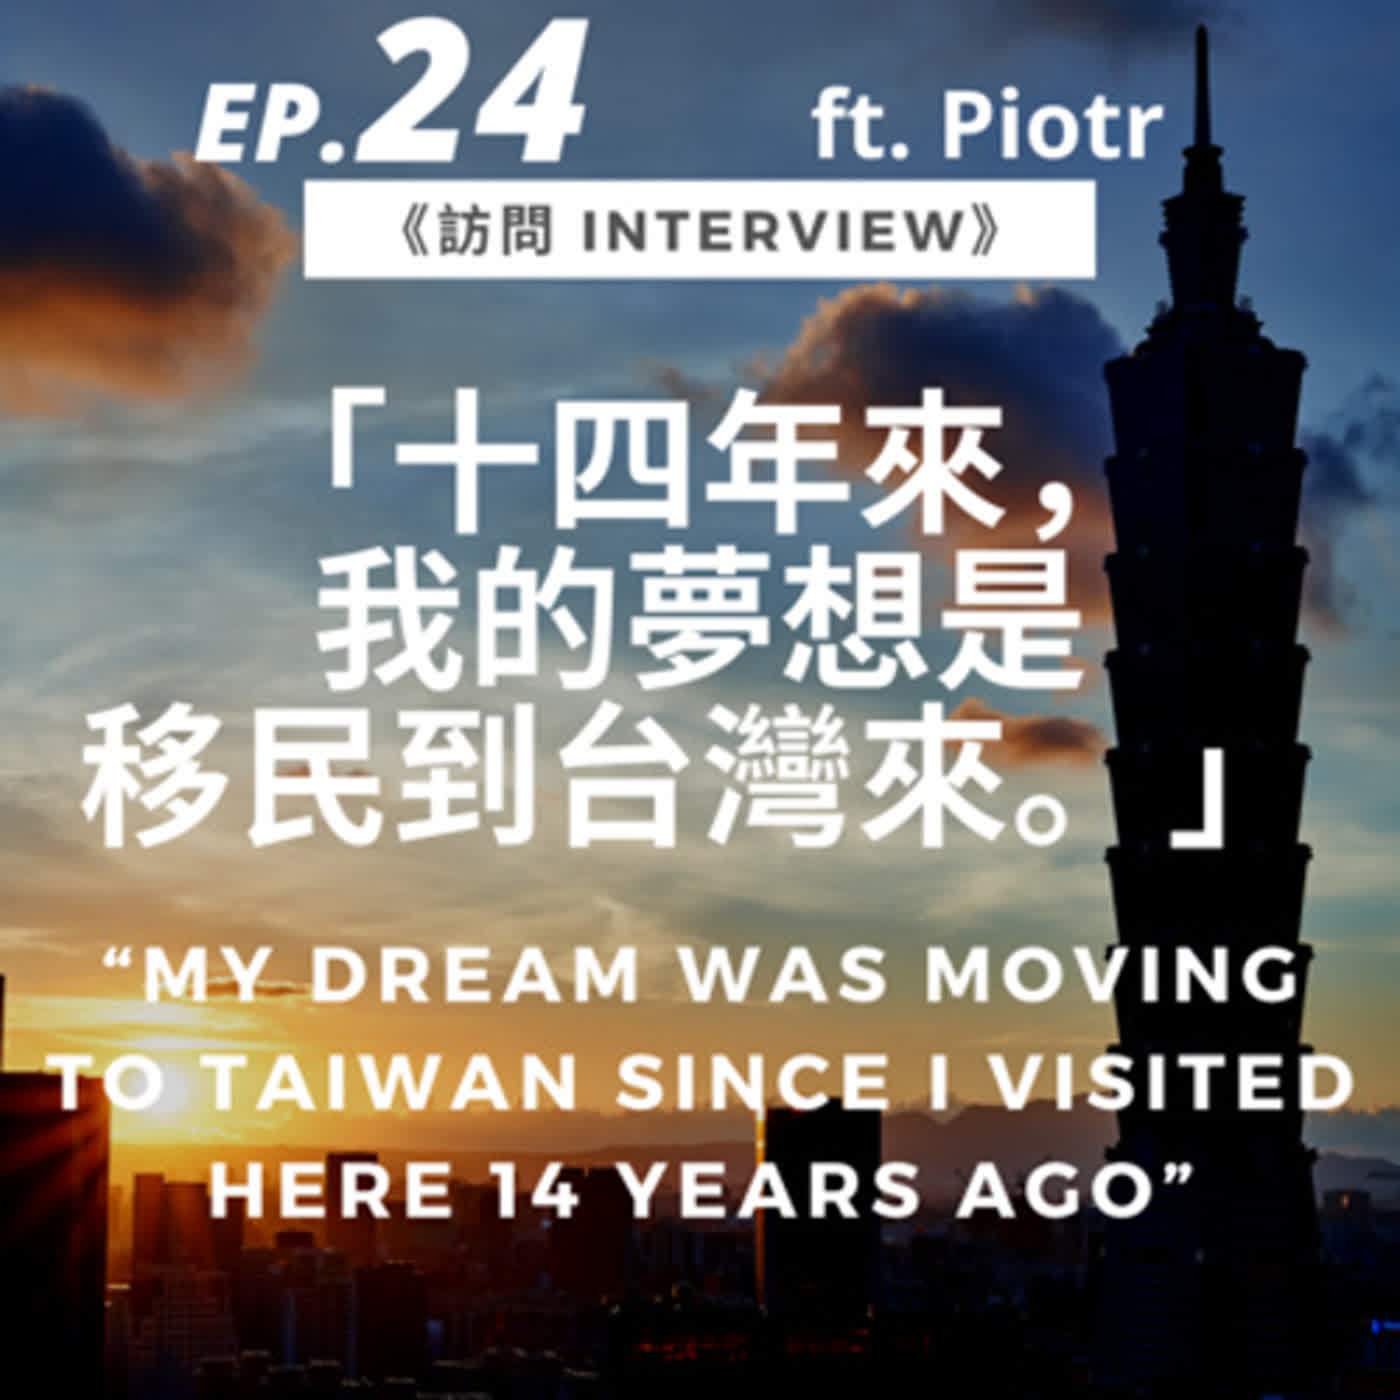 24. 「十四年來，我的夢想是移民到台灣來。」ft. Piotr “My dream was moving to Taiwan since I visited here 14 years ago”